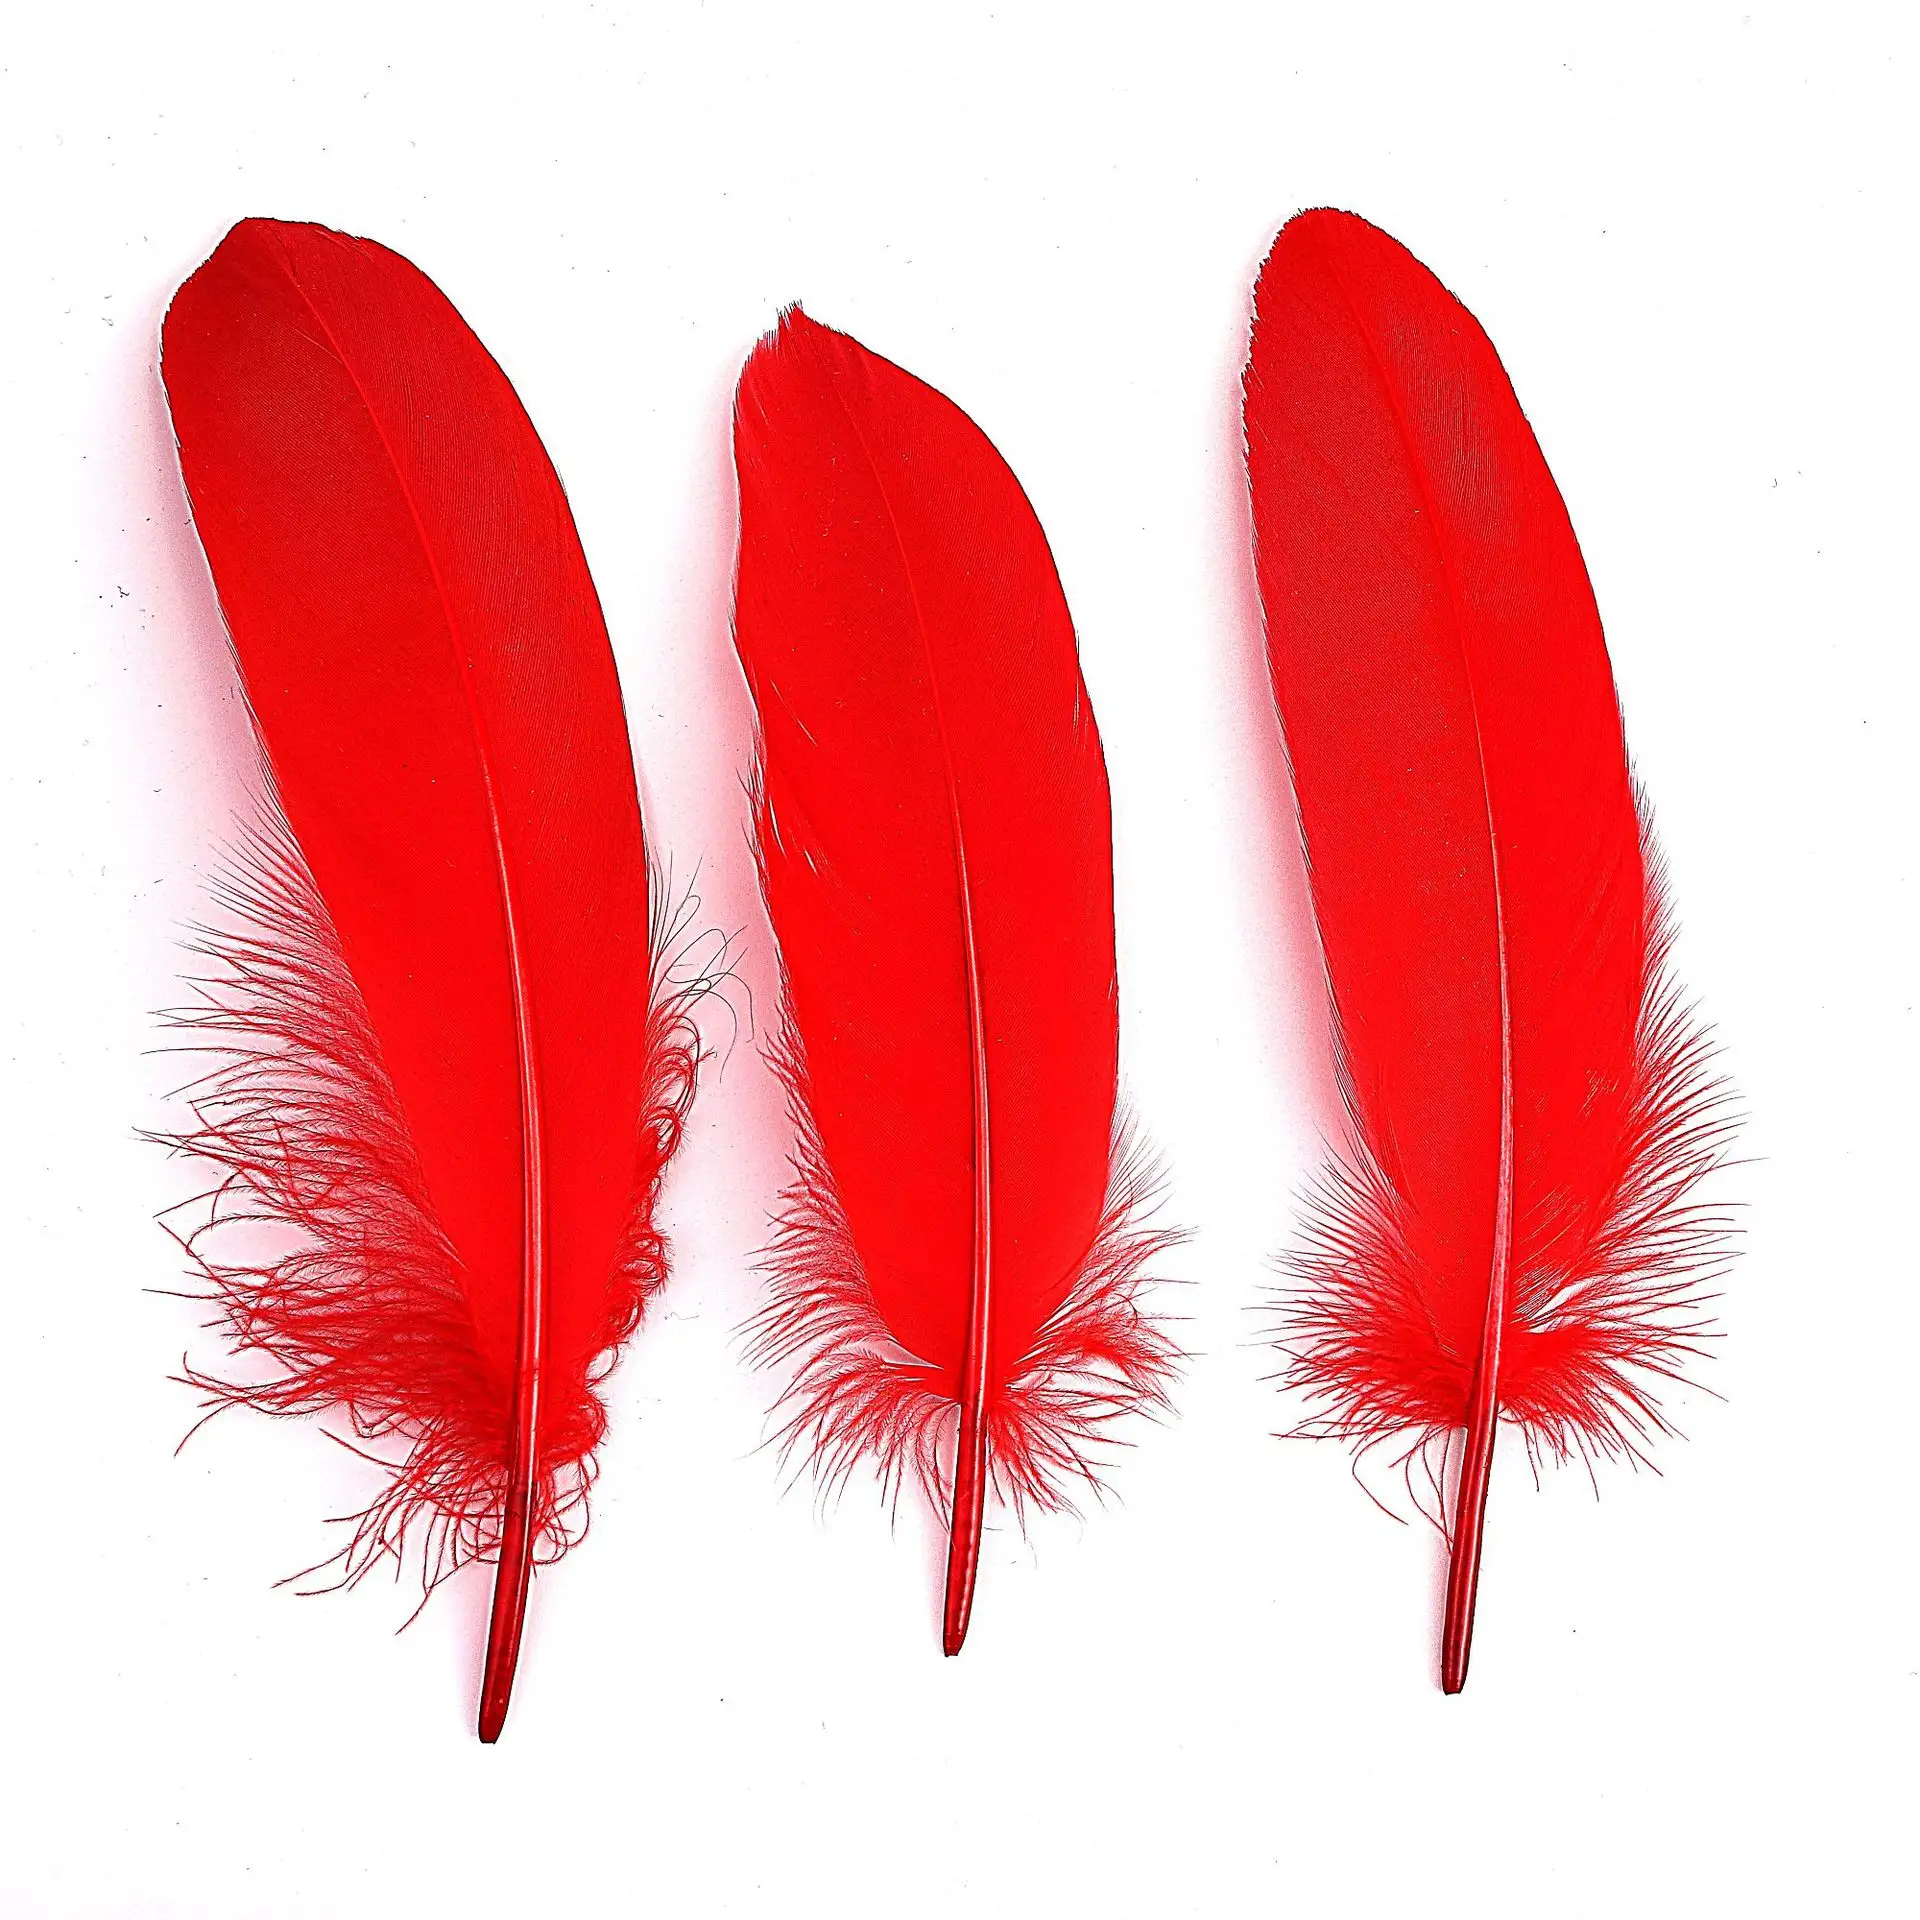 15-20cm 10 개 장식, 코스프레, 배드민턴 및 셔틀콕 원시, DIY 공예 화려한 깃털을 위해 염색 된 거위 깃털